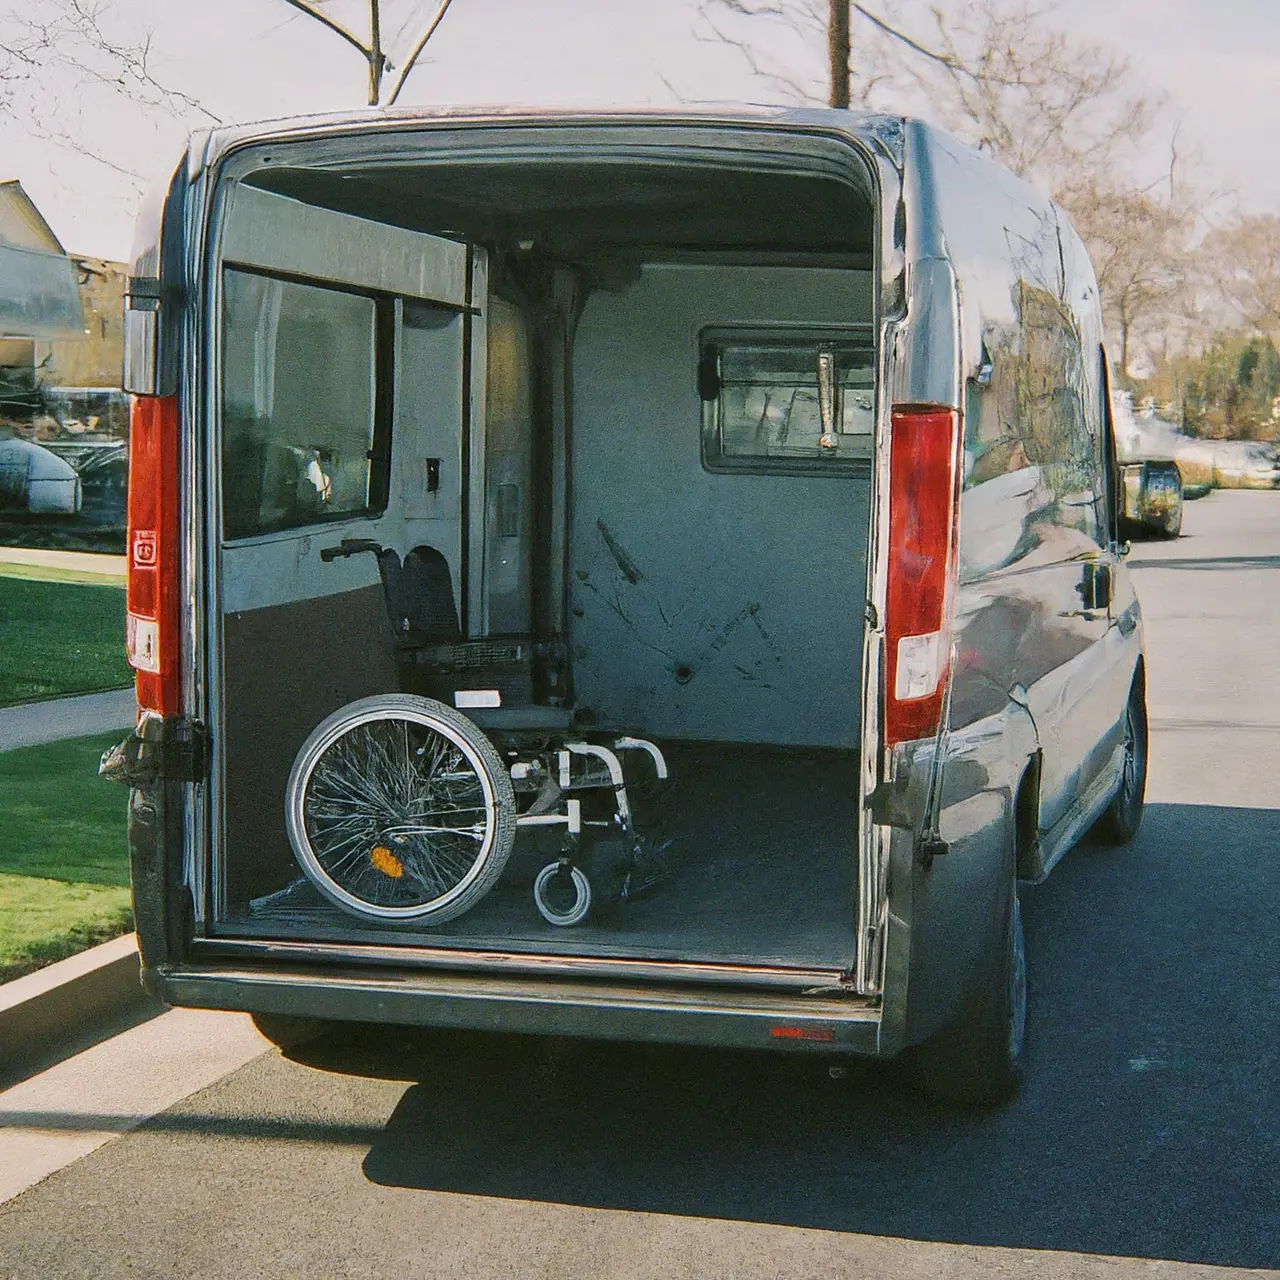 Wheelchair accessible van on a sunny suburban street. 35mm stock photo